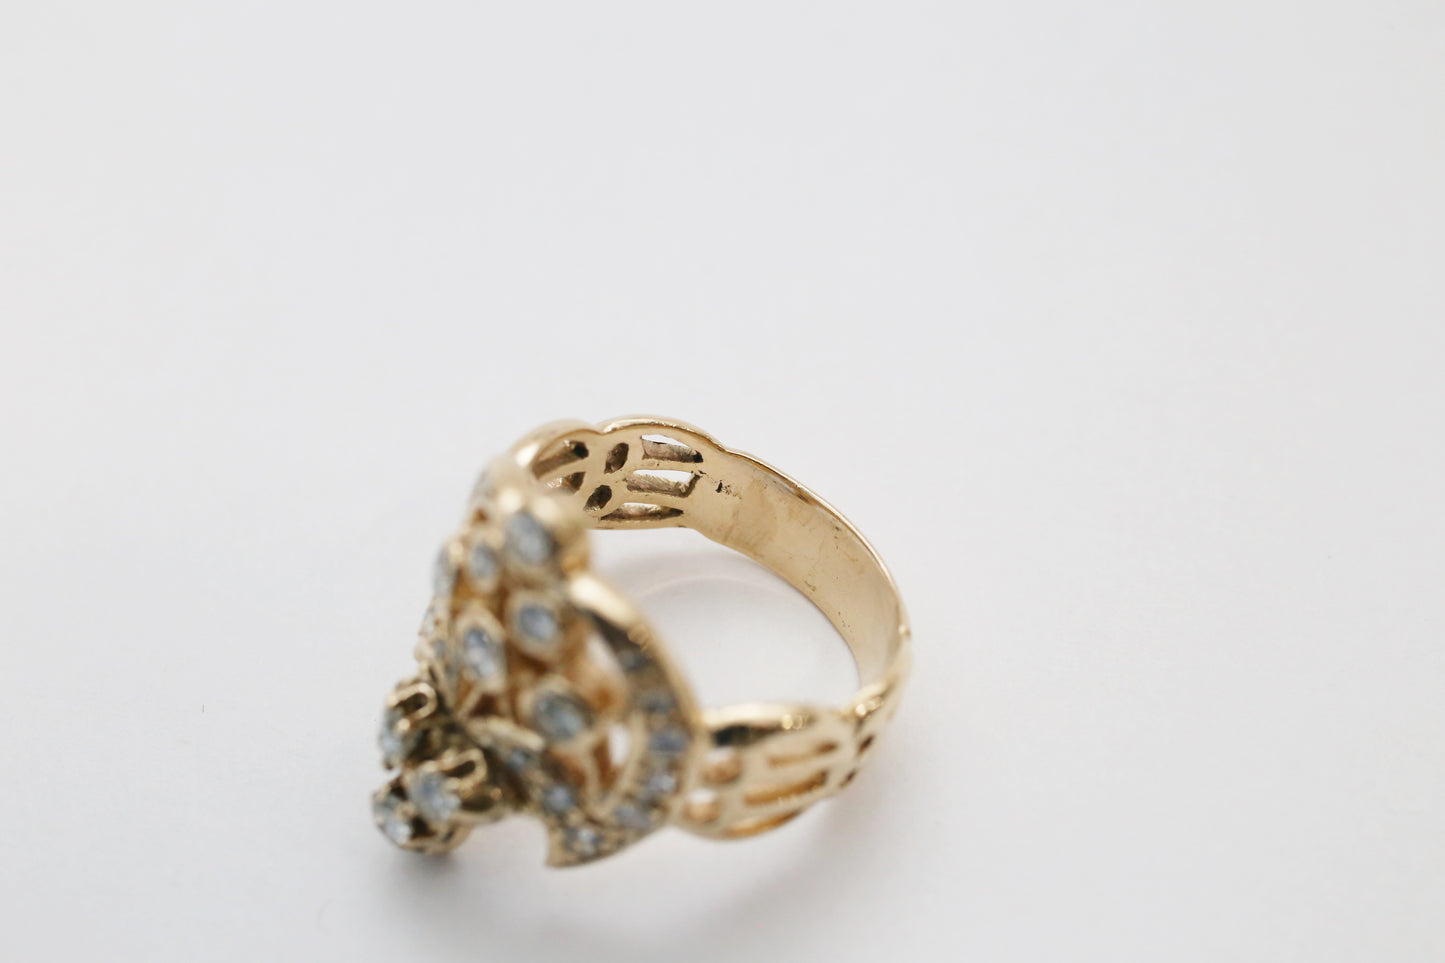 14k Yellow Gold Multi-Diamond Ring, Size 8.5 - 8.7g